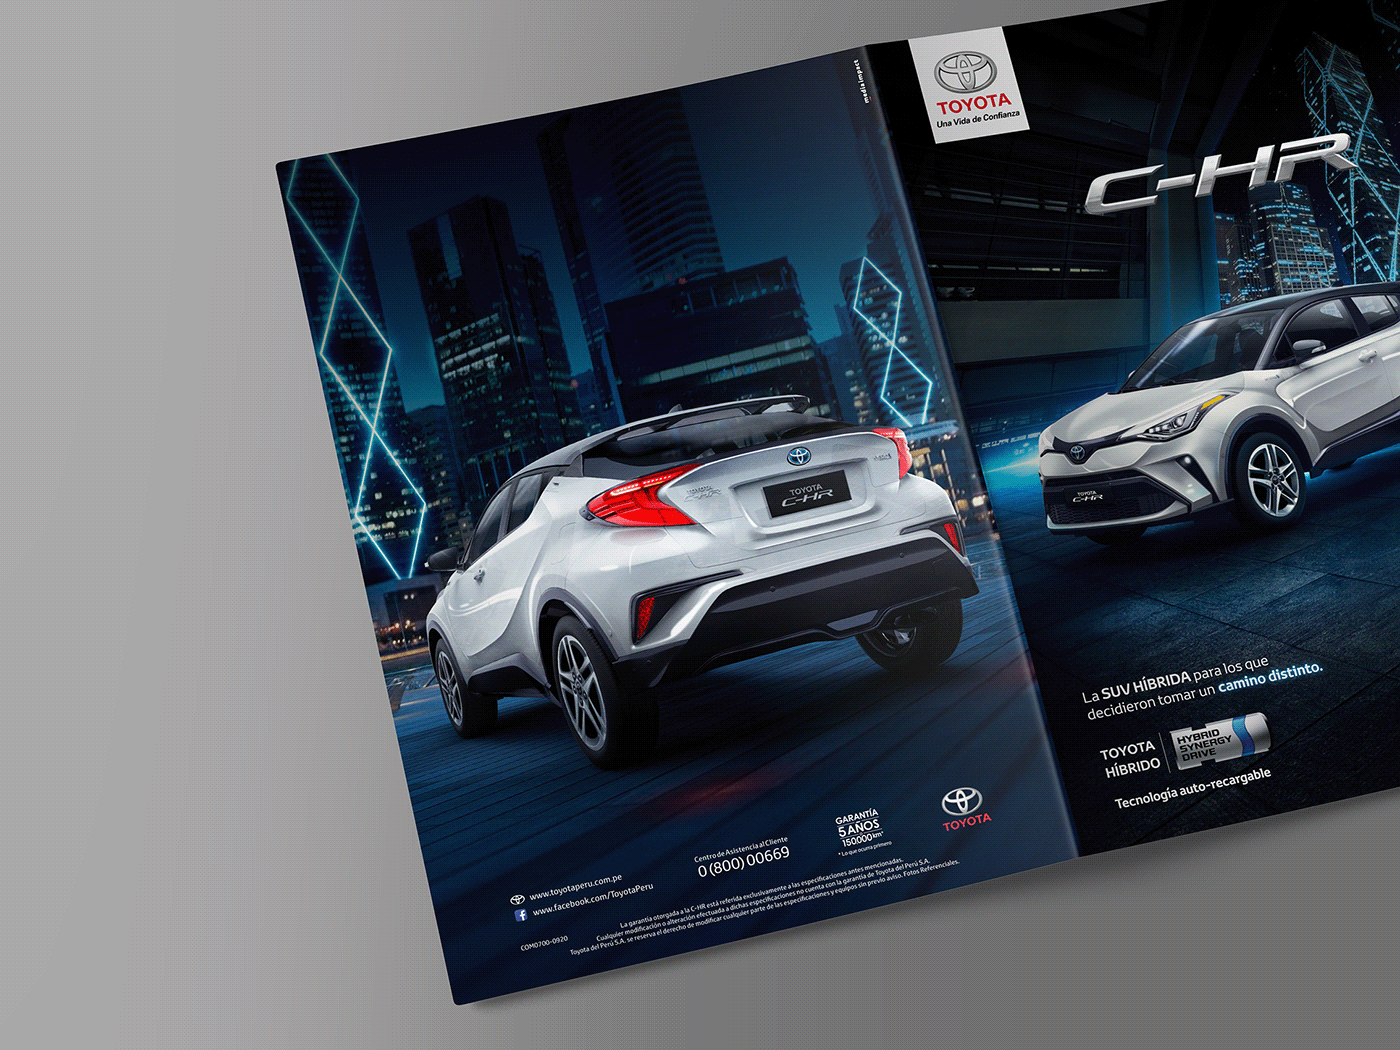 agencia Autos C-HR Camioneta catalogo Diseño editorial InDesign toyota